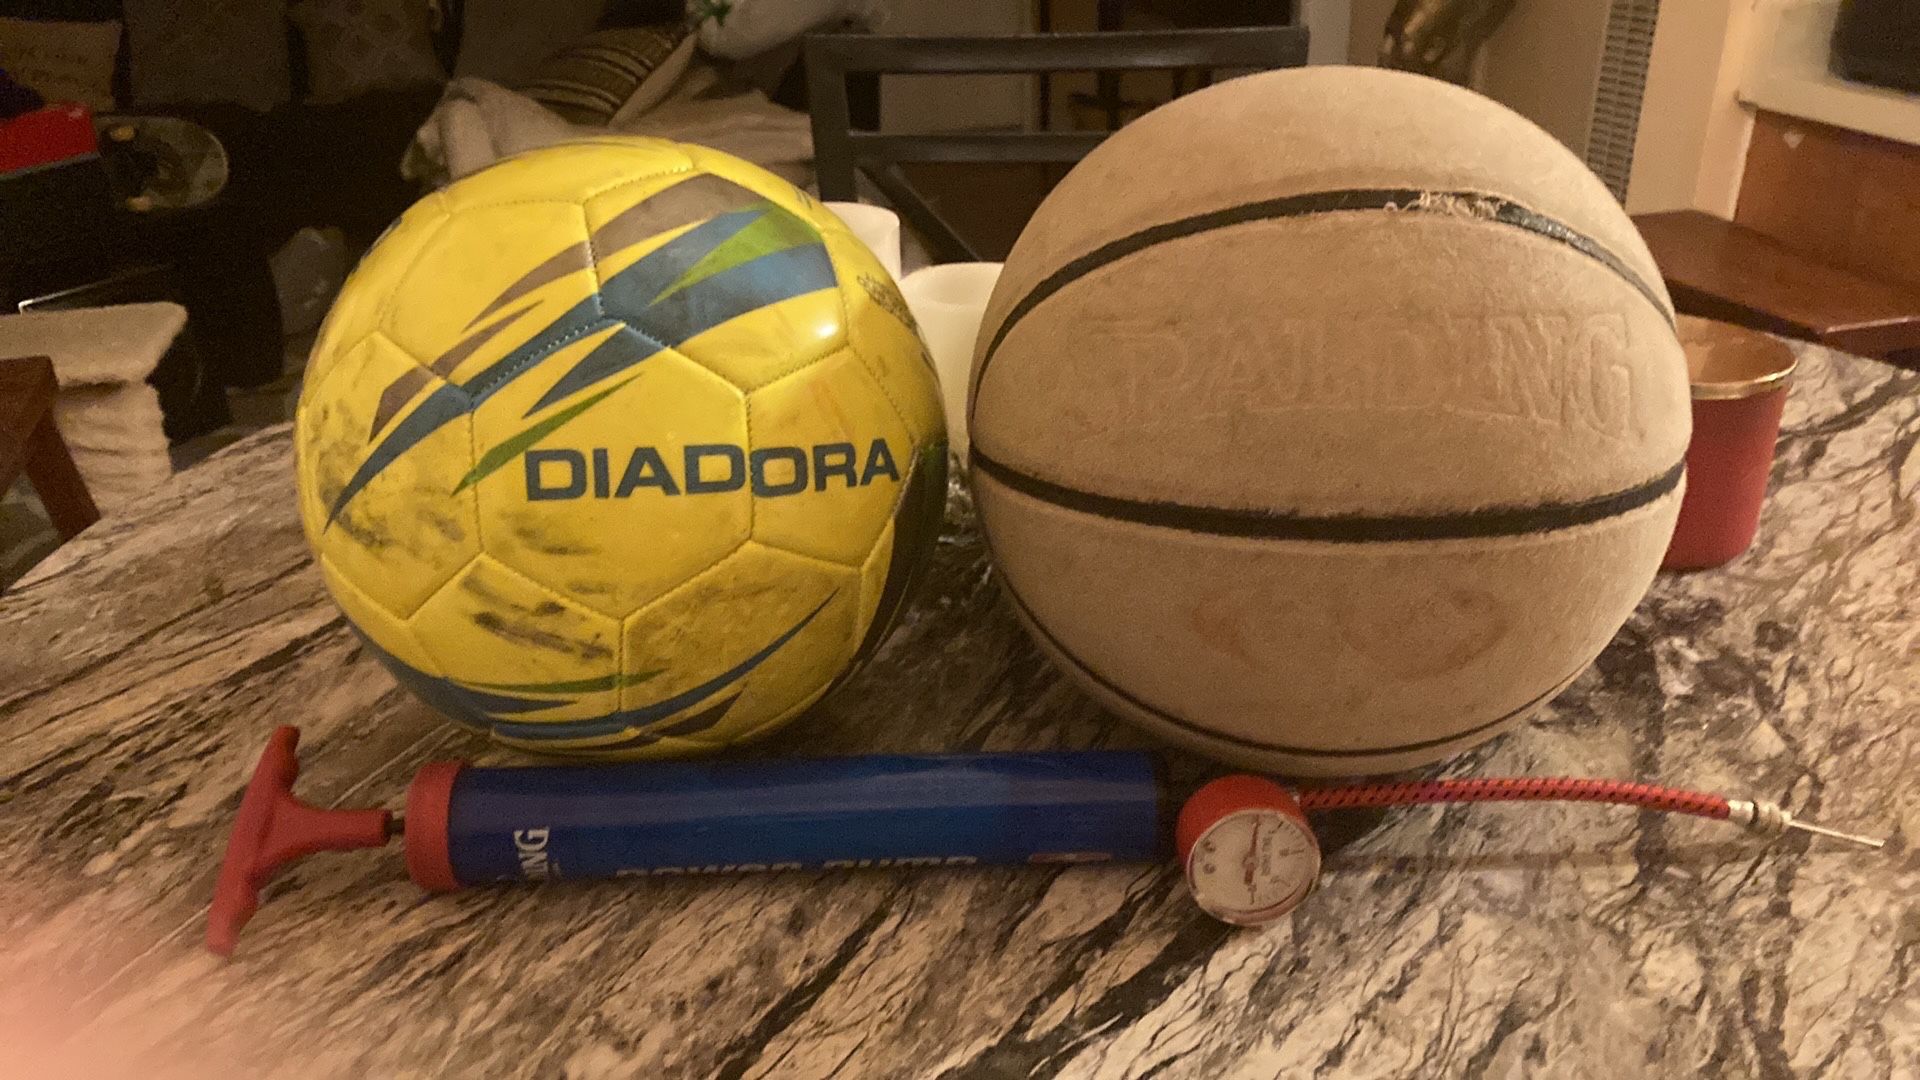 Spalding basket ball diadora soccer ball and power pump